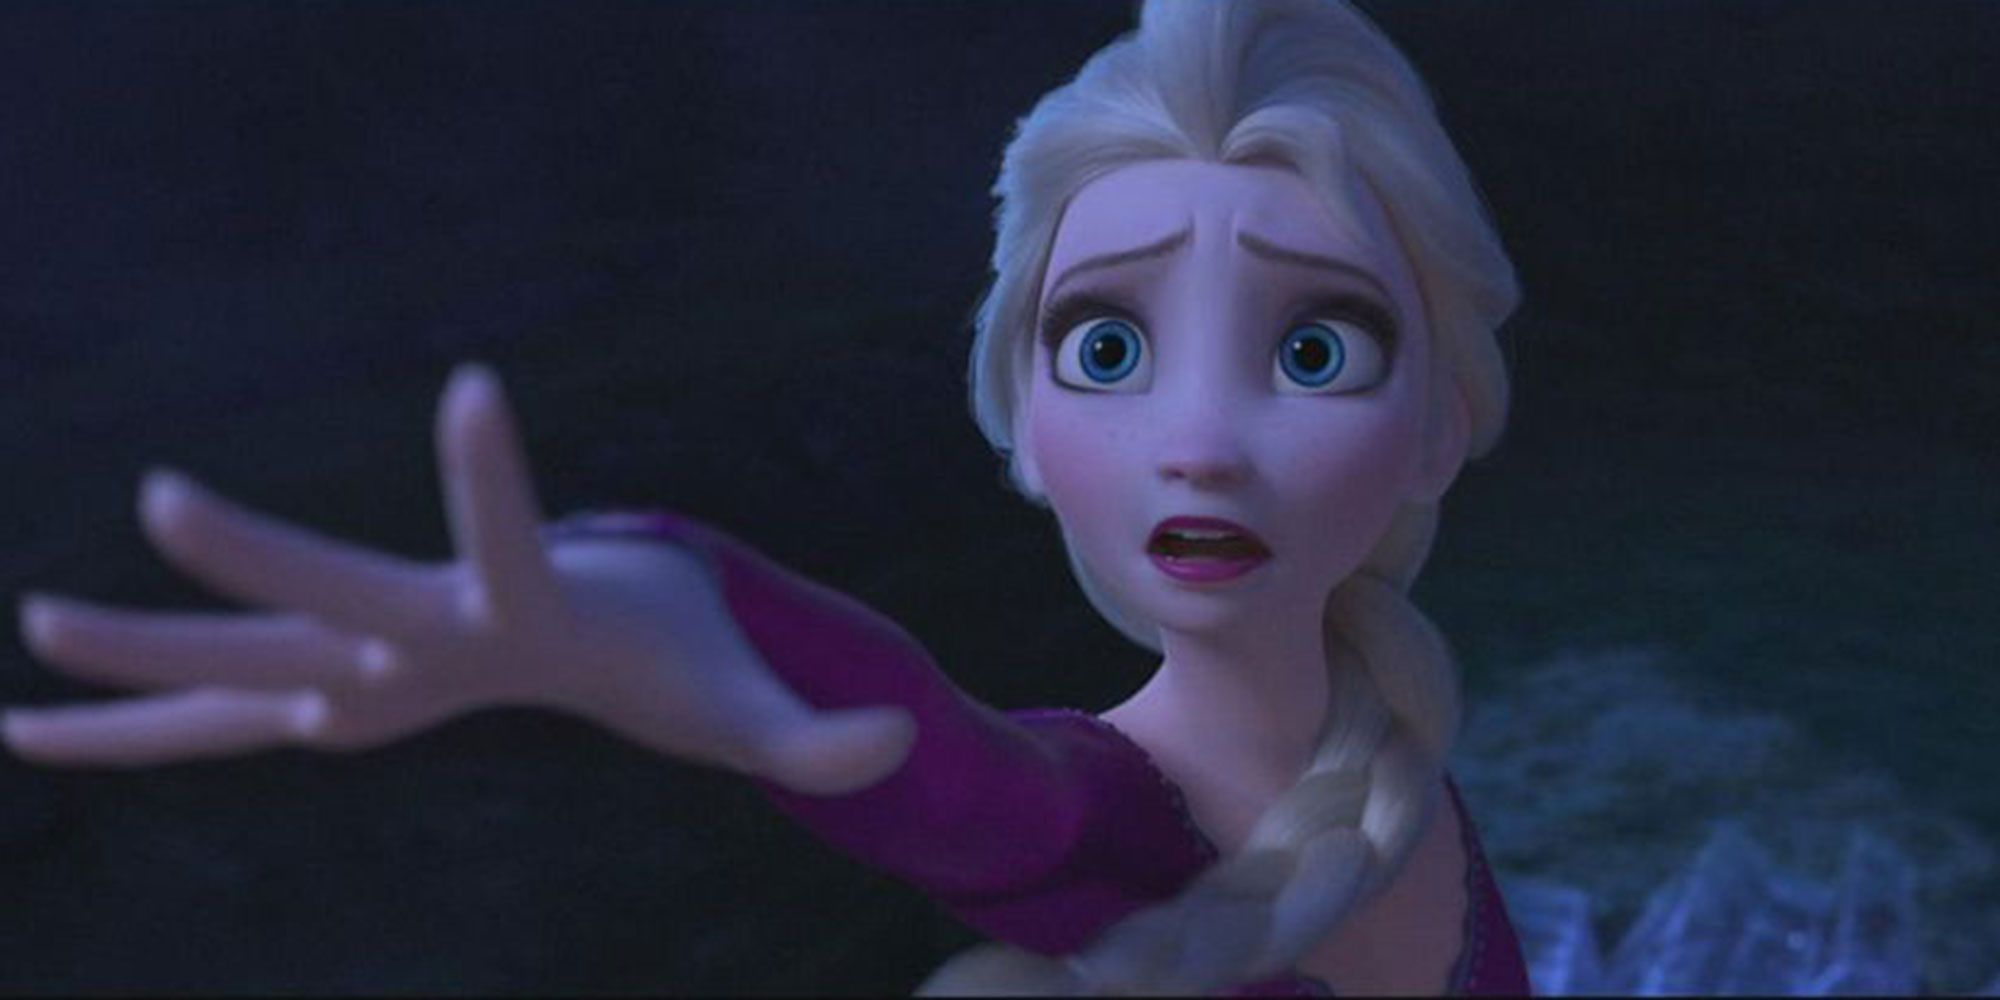 Disney Frozen Sex - Frozen 2: Is Elsa a lesbian or asexual? Trailer hints at both